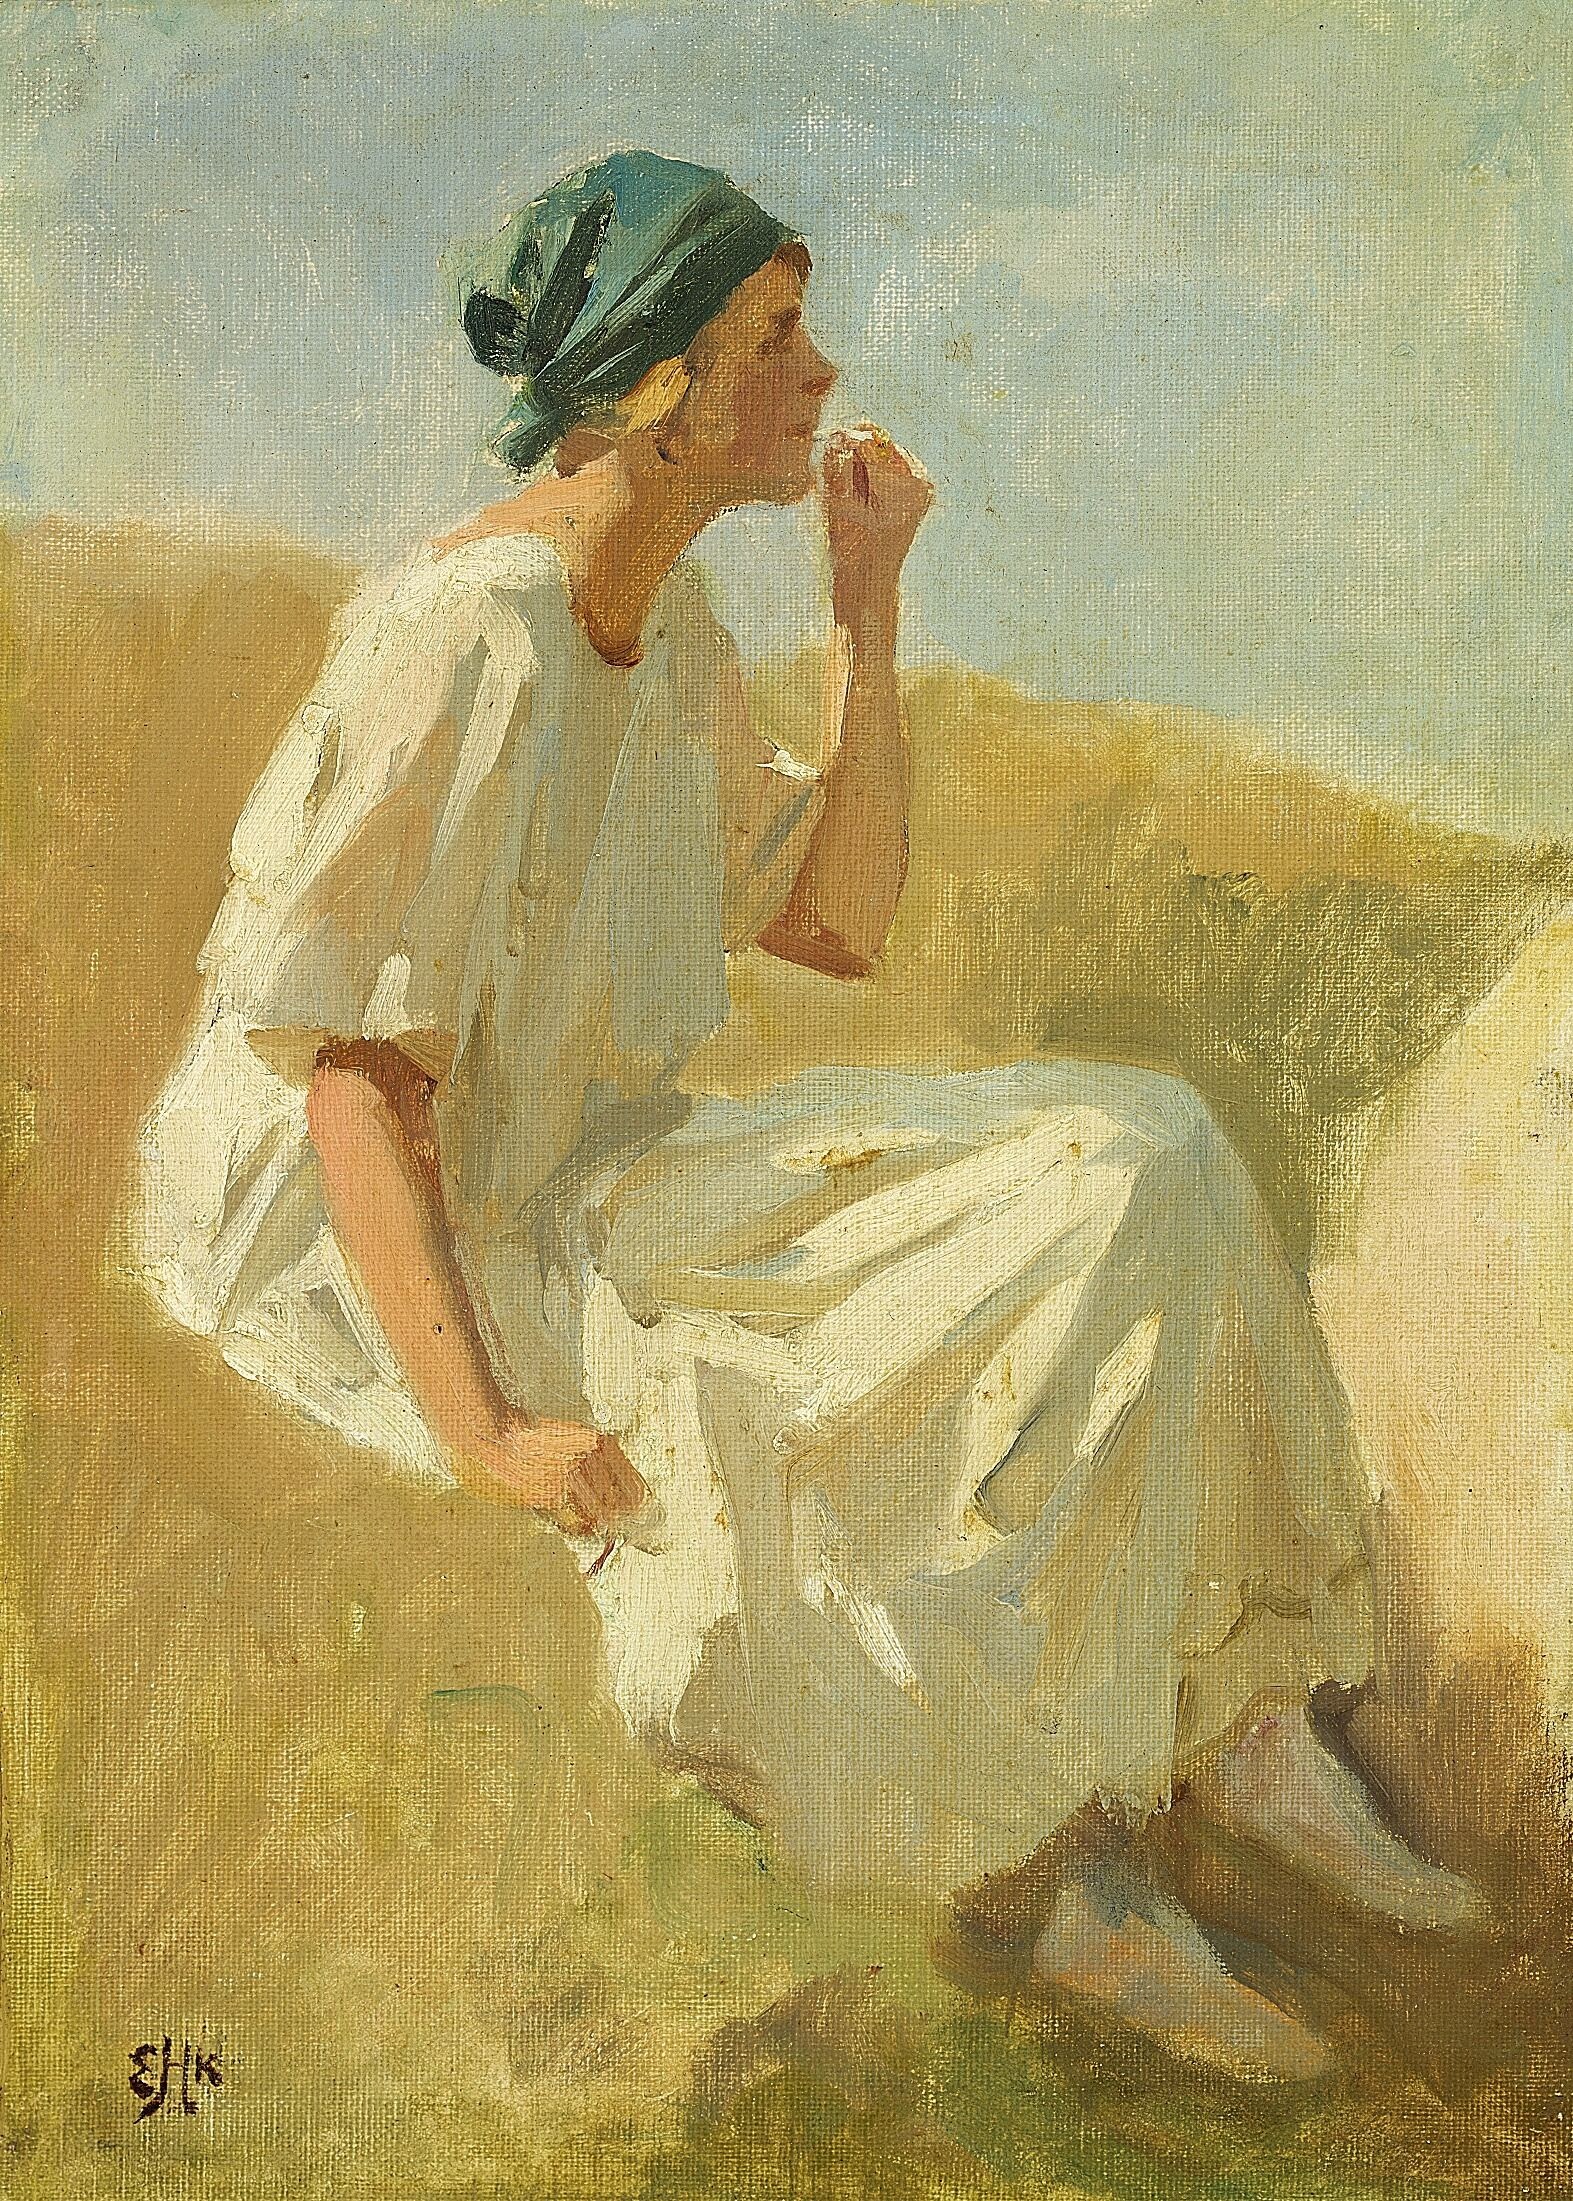 Erik Ludwig Henningsen (1855-1930) - A Genre Painter